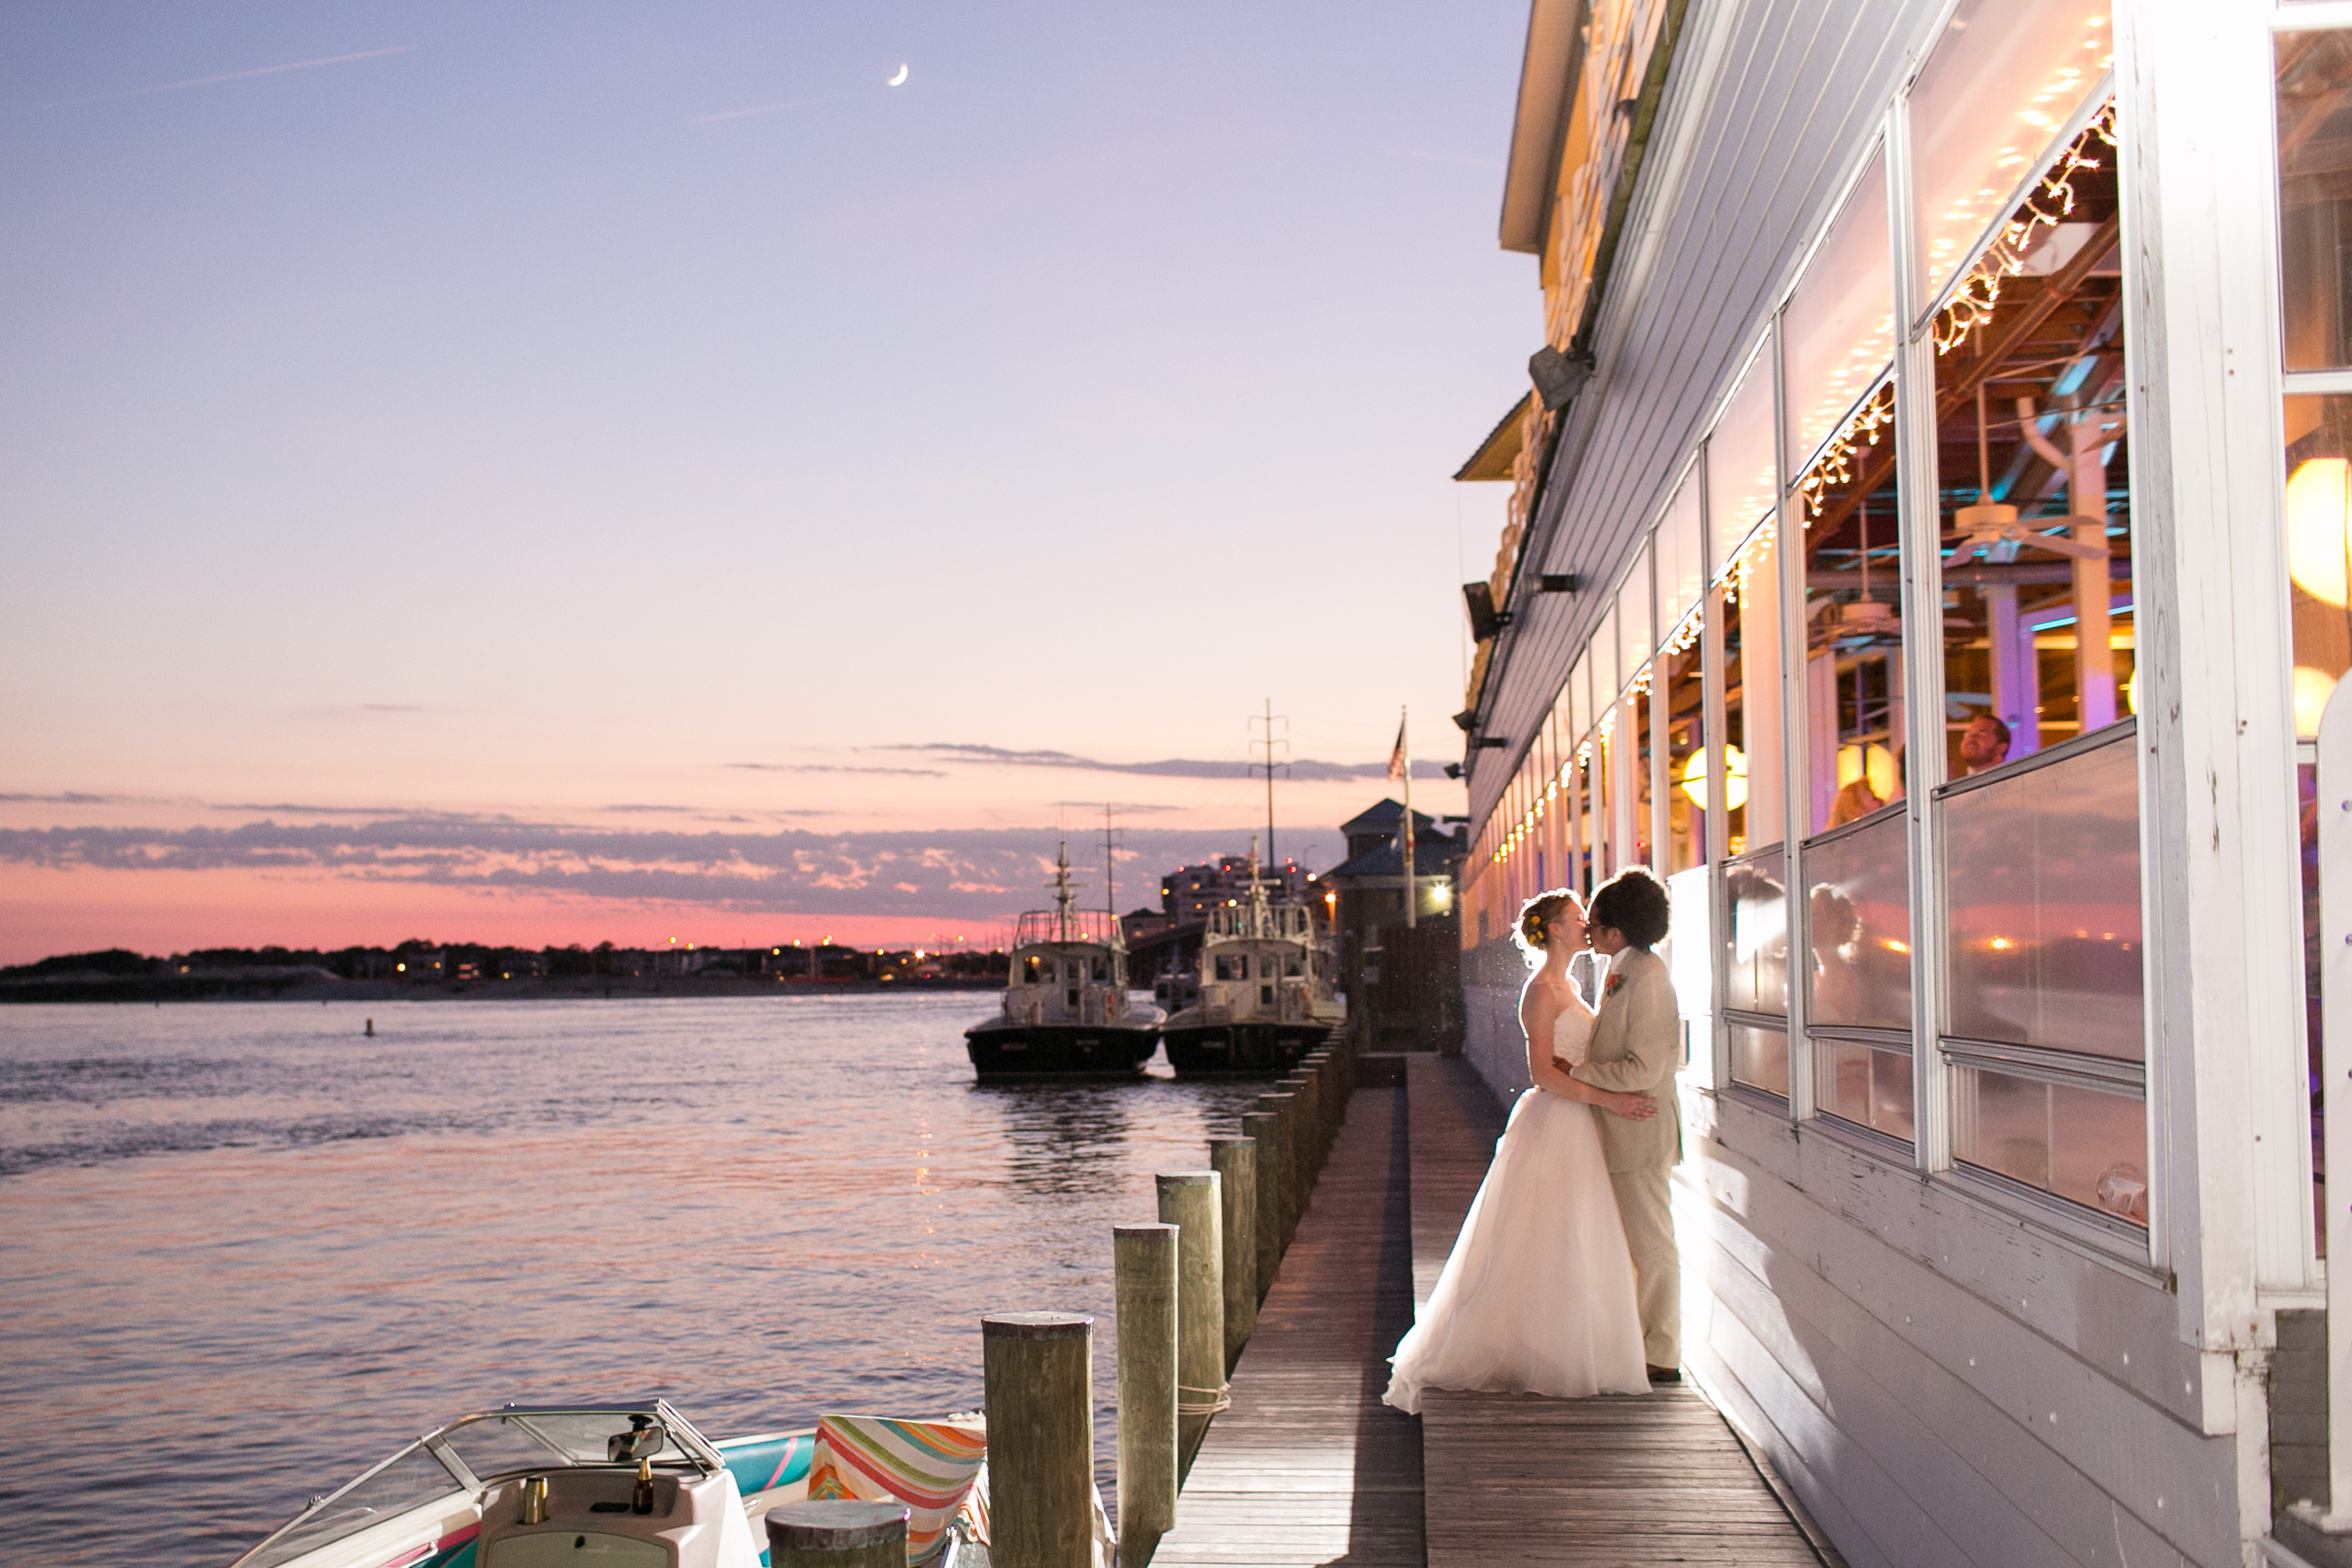 Wedding Planning In Virginia Beach Venues Local Vendors